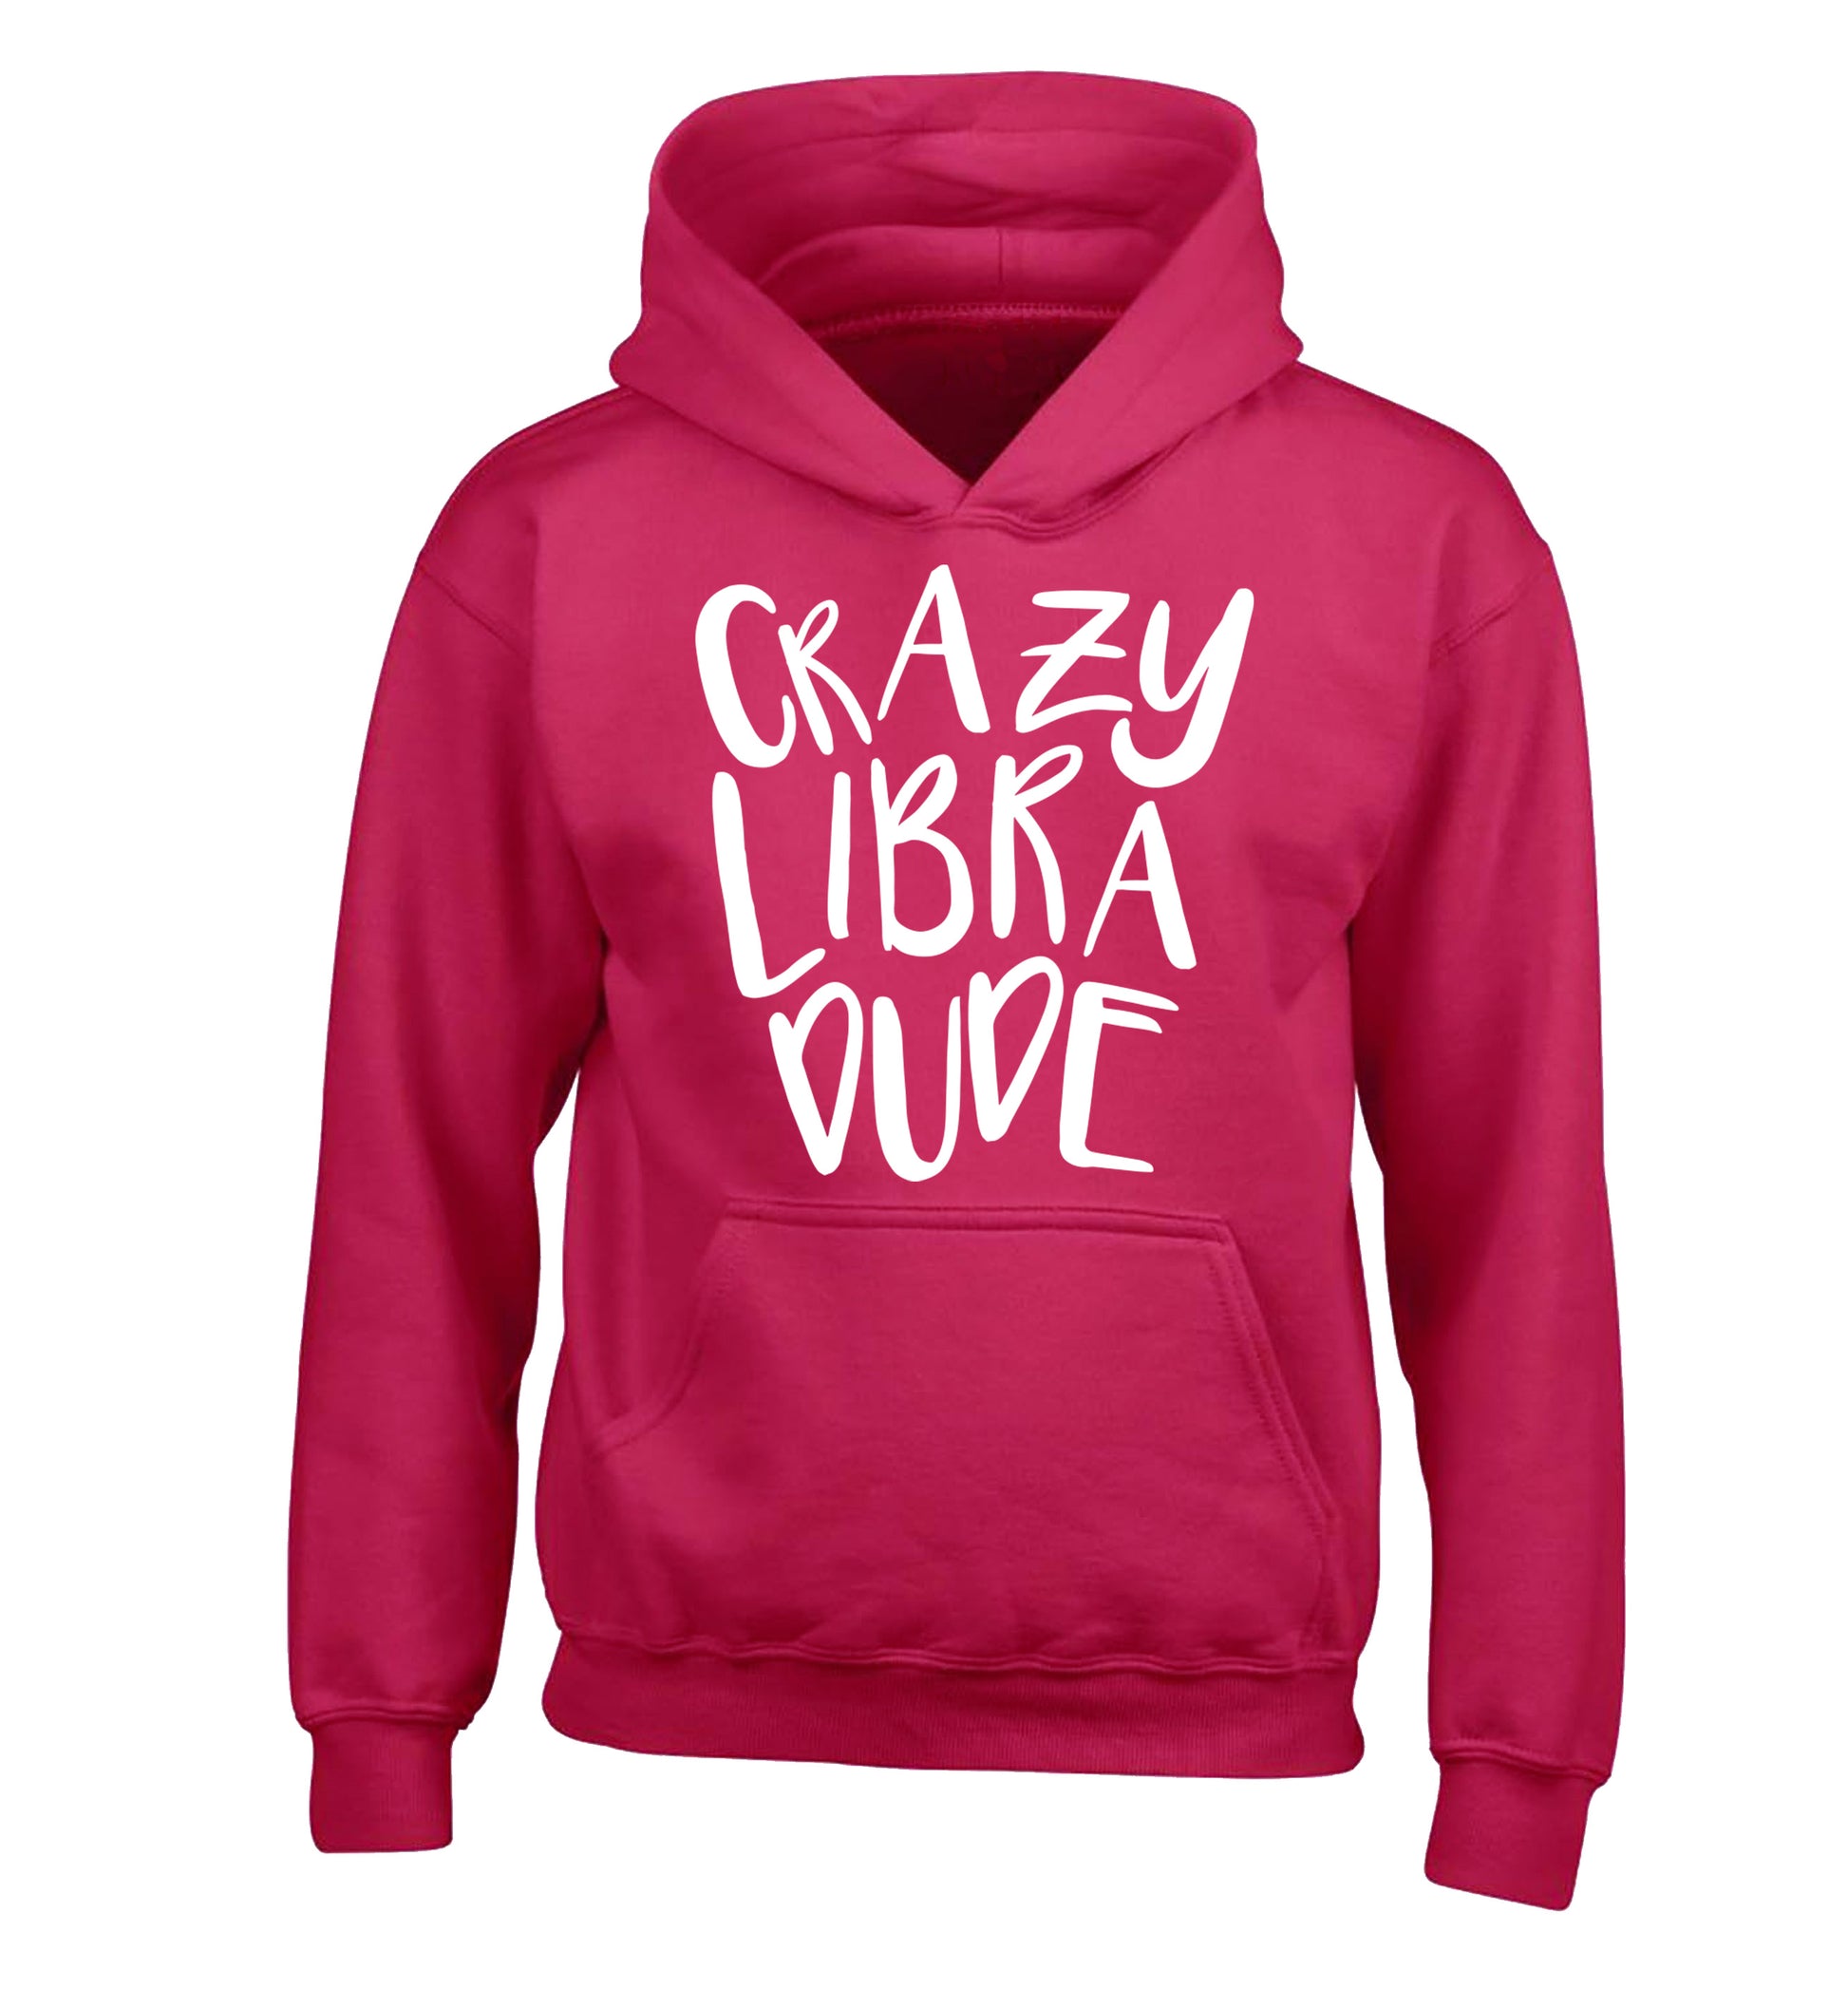 Crazy libra dude children's pink hoodie 12-13 Years